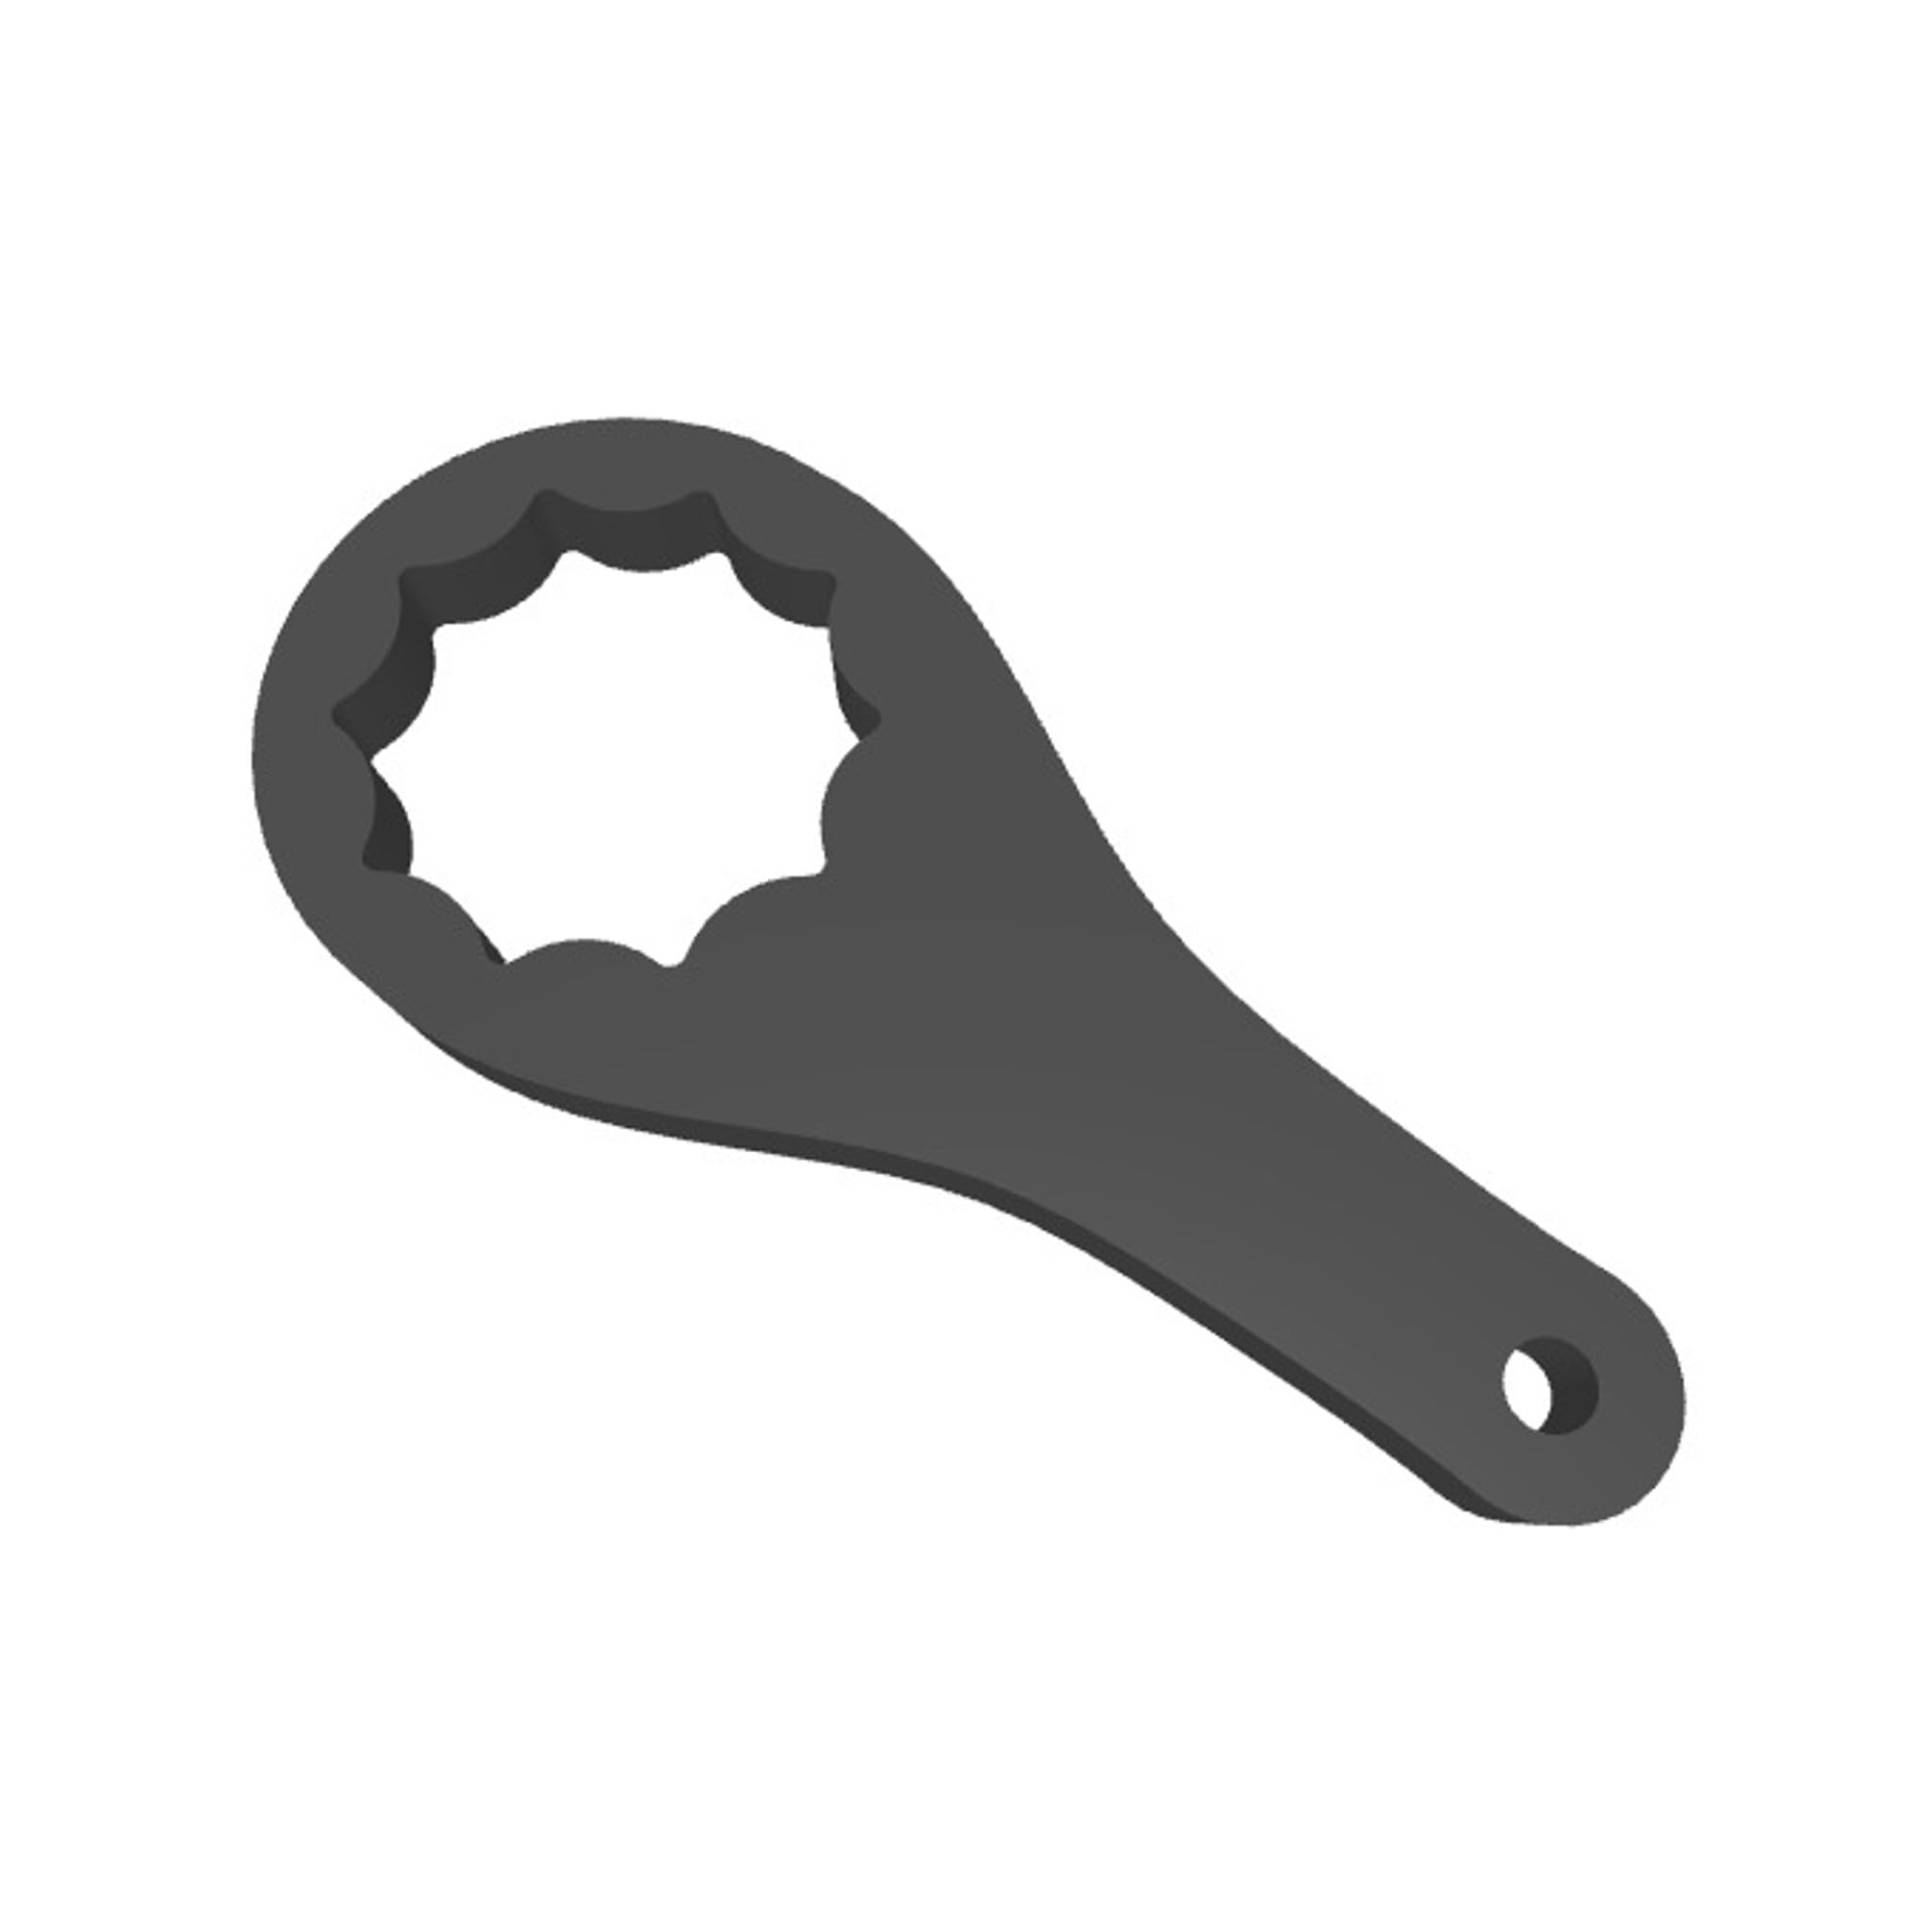 ULROAD Schlüssel für Öldeckel für Moto Guzzi Motorräder z.B. V7 V9 V50 V65 V35 Oil Cap Tool Öffner Öl Deckel Werkzeug Öl Einfülldeckel von ULROAD